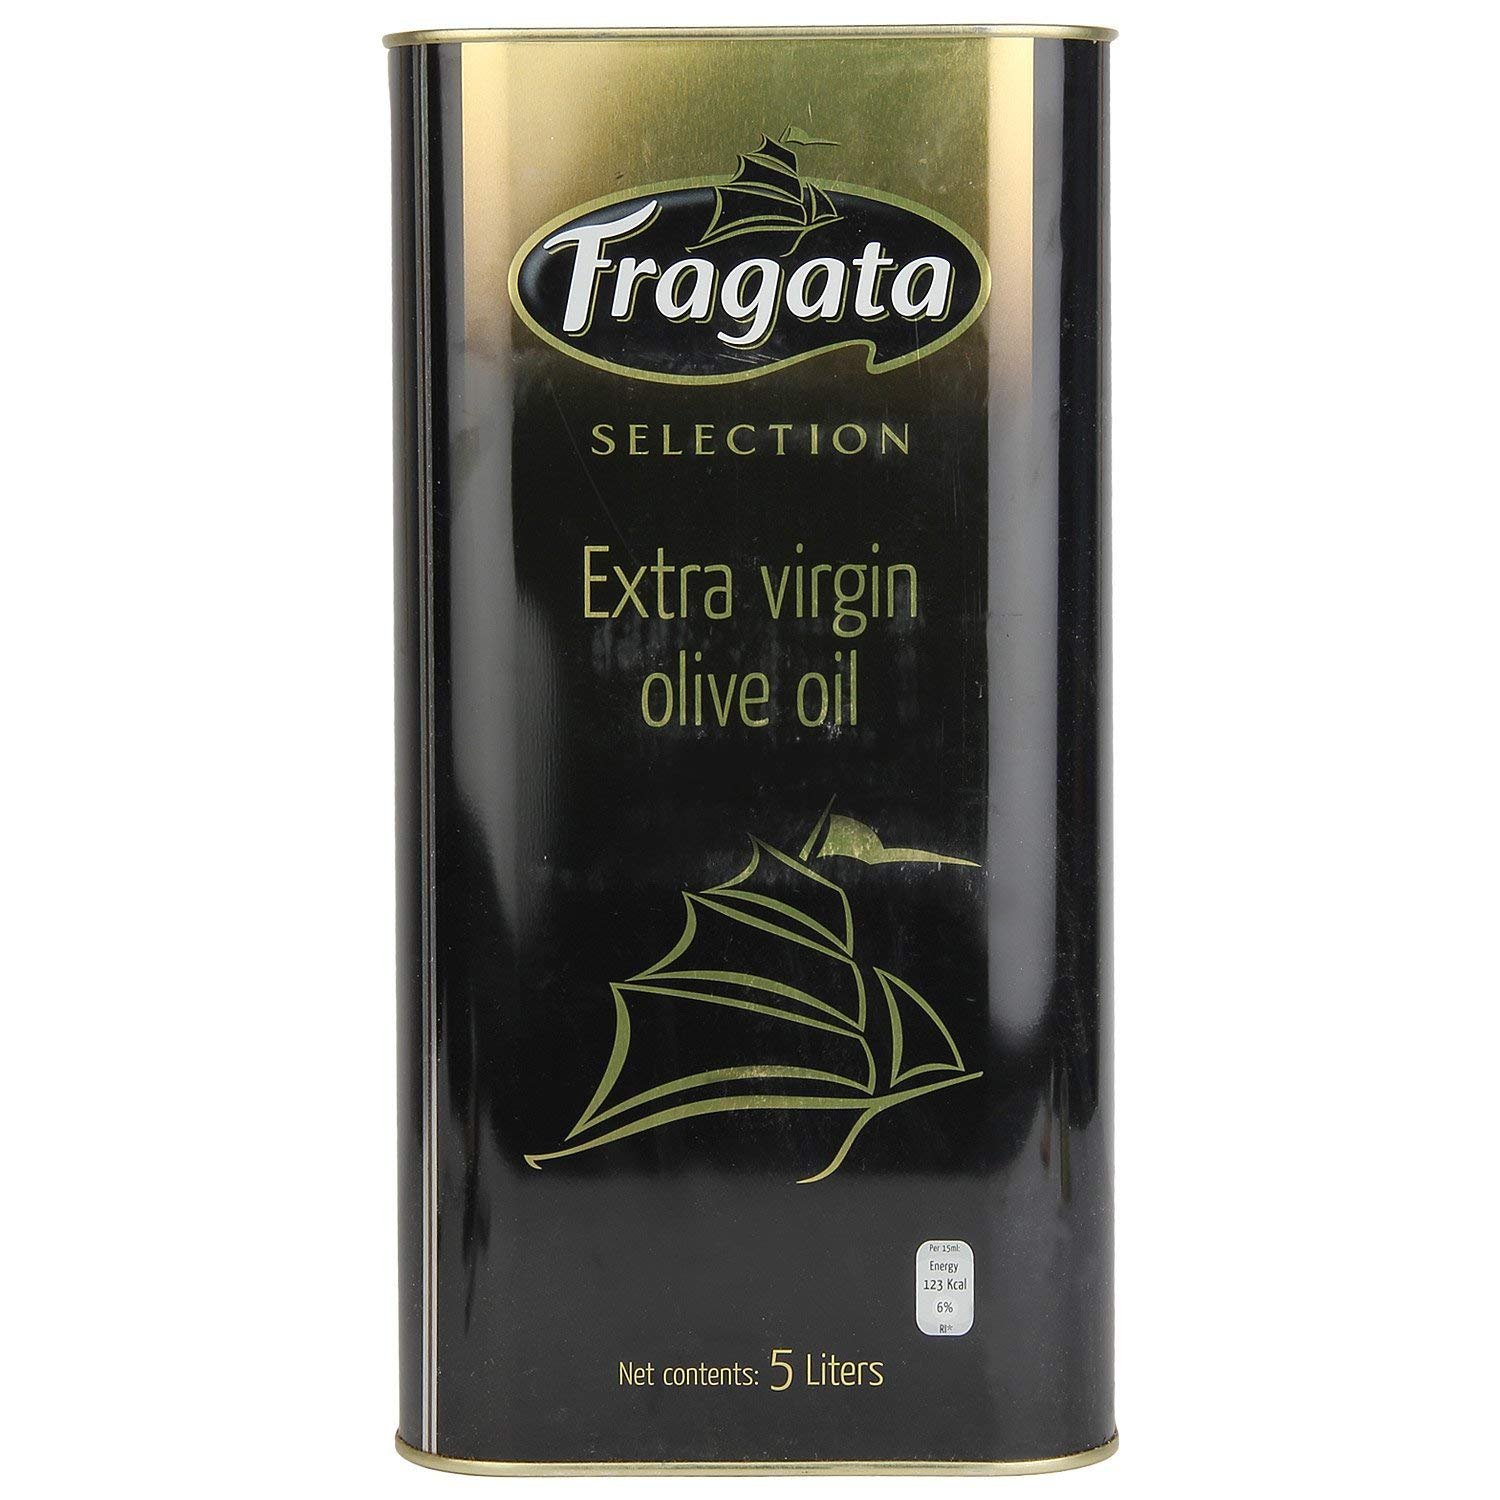 Марки оливкового масла. Extra Virgin Olive Oil Fragata. Extra Pomace оливковое масло. Масло оливковое Фрагата Ромасе Оливе оил. Масло оливковое Экстра Вирджин турецкое.